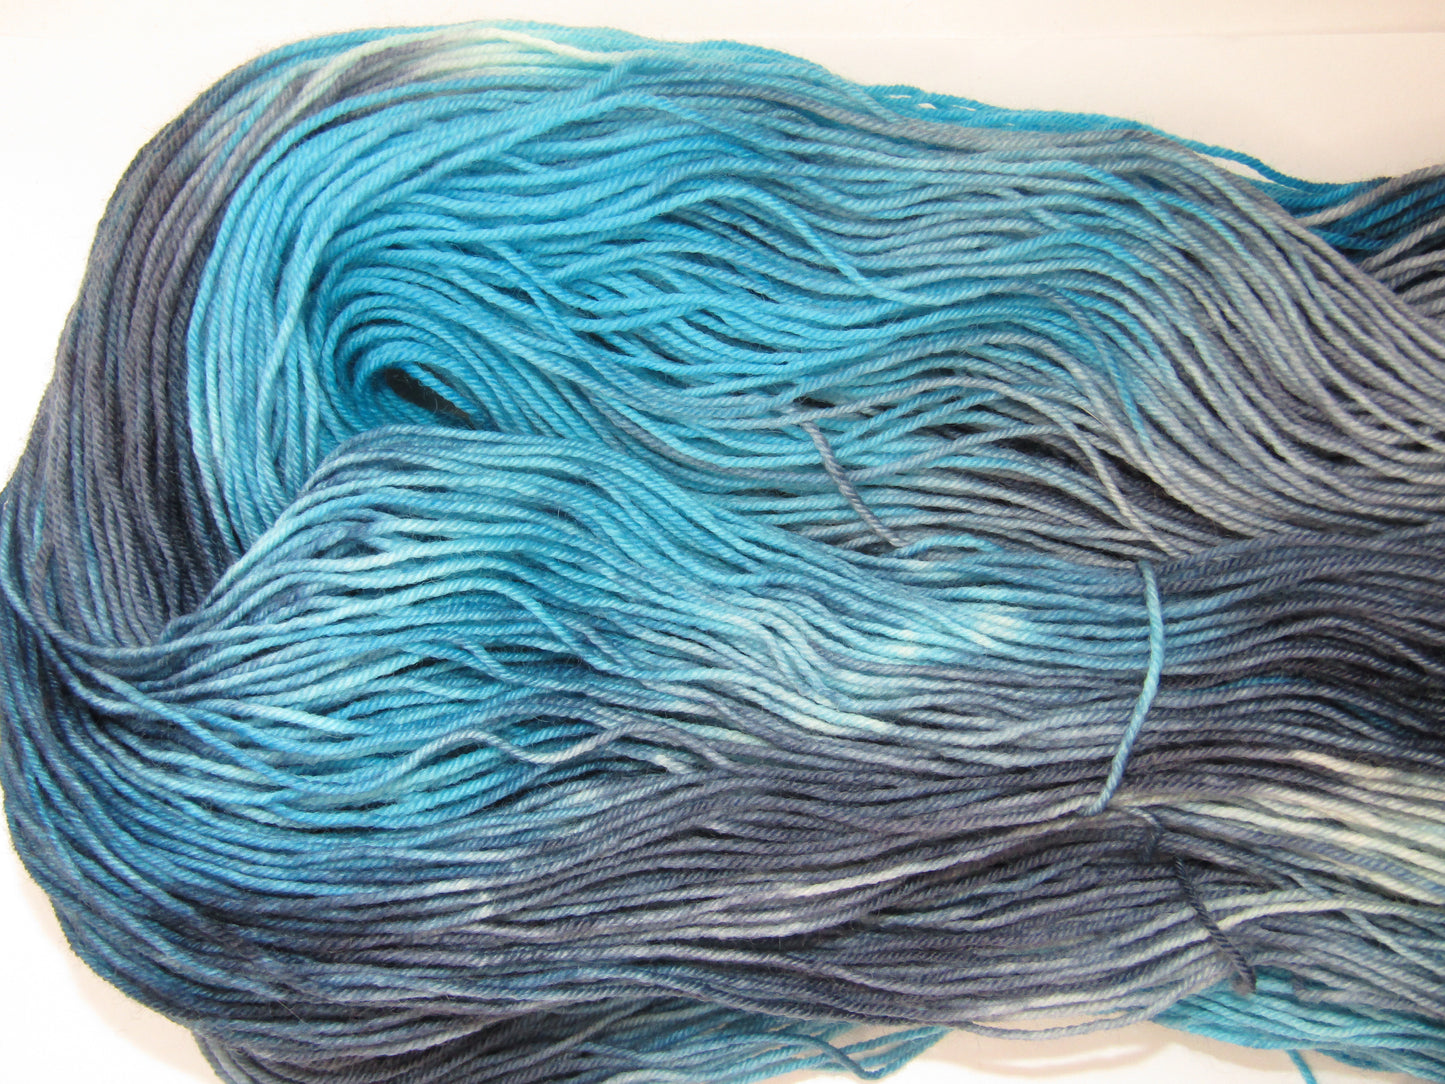 Hand-Dyed Yarn Barnaby Single Skein of yarn in shades of blued steel and aqua.  